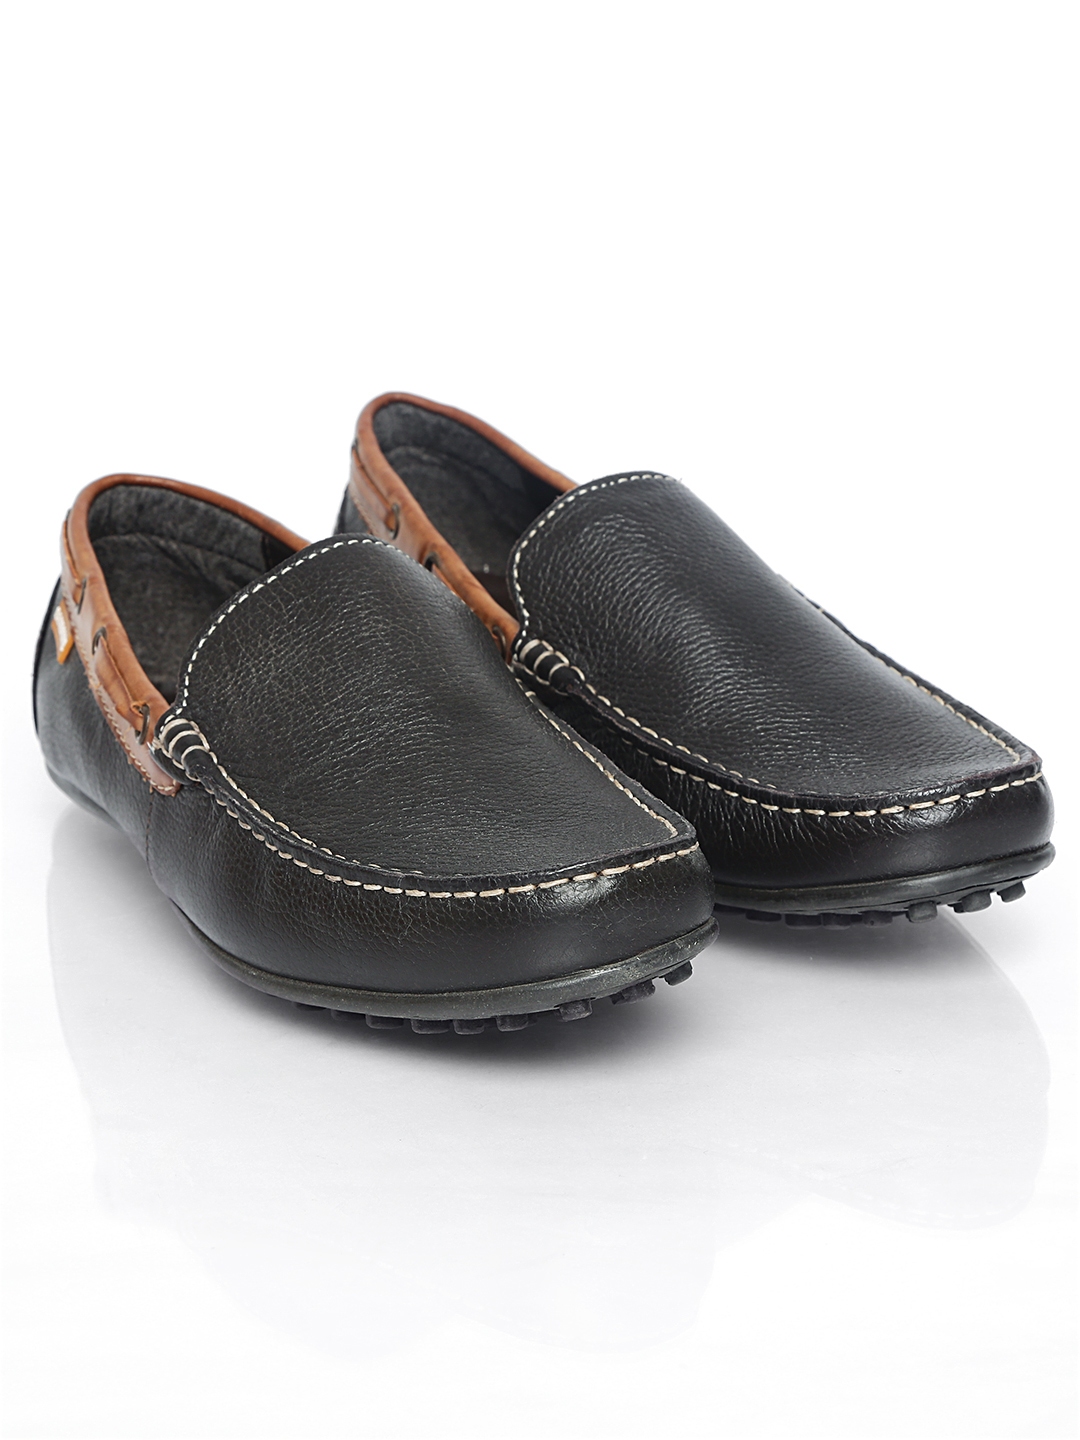 Buy U.S. Polo Assn. Men Brown Shoes - Casual Shoes for Men 81573 | Myntra